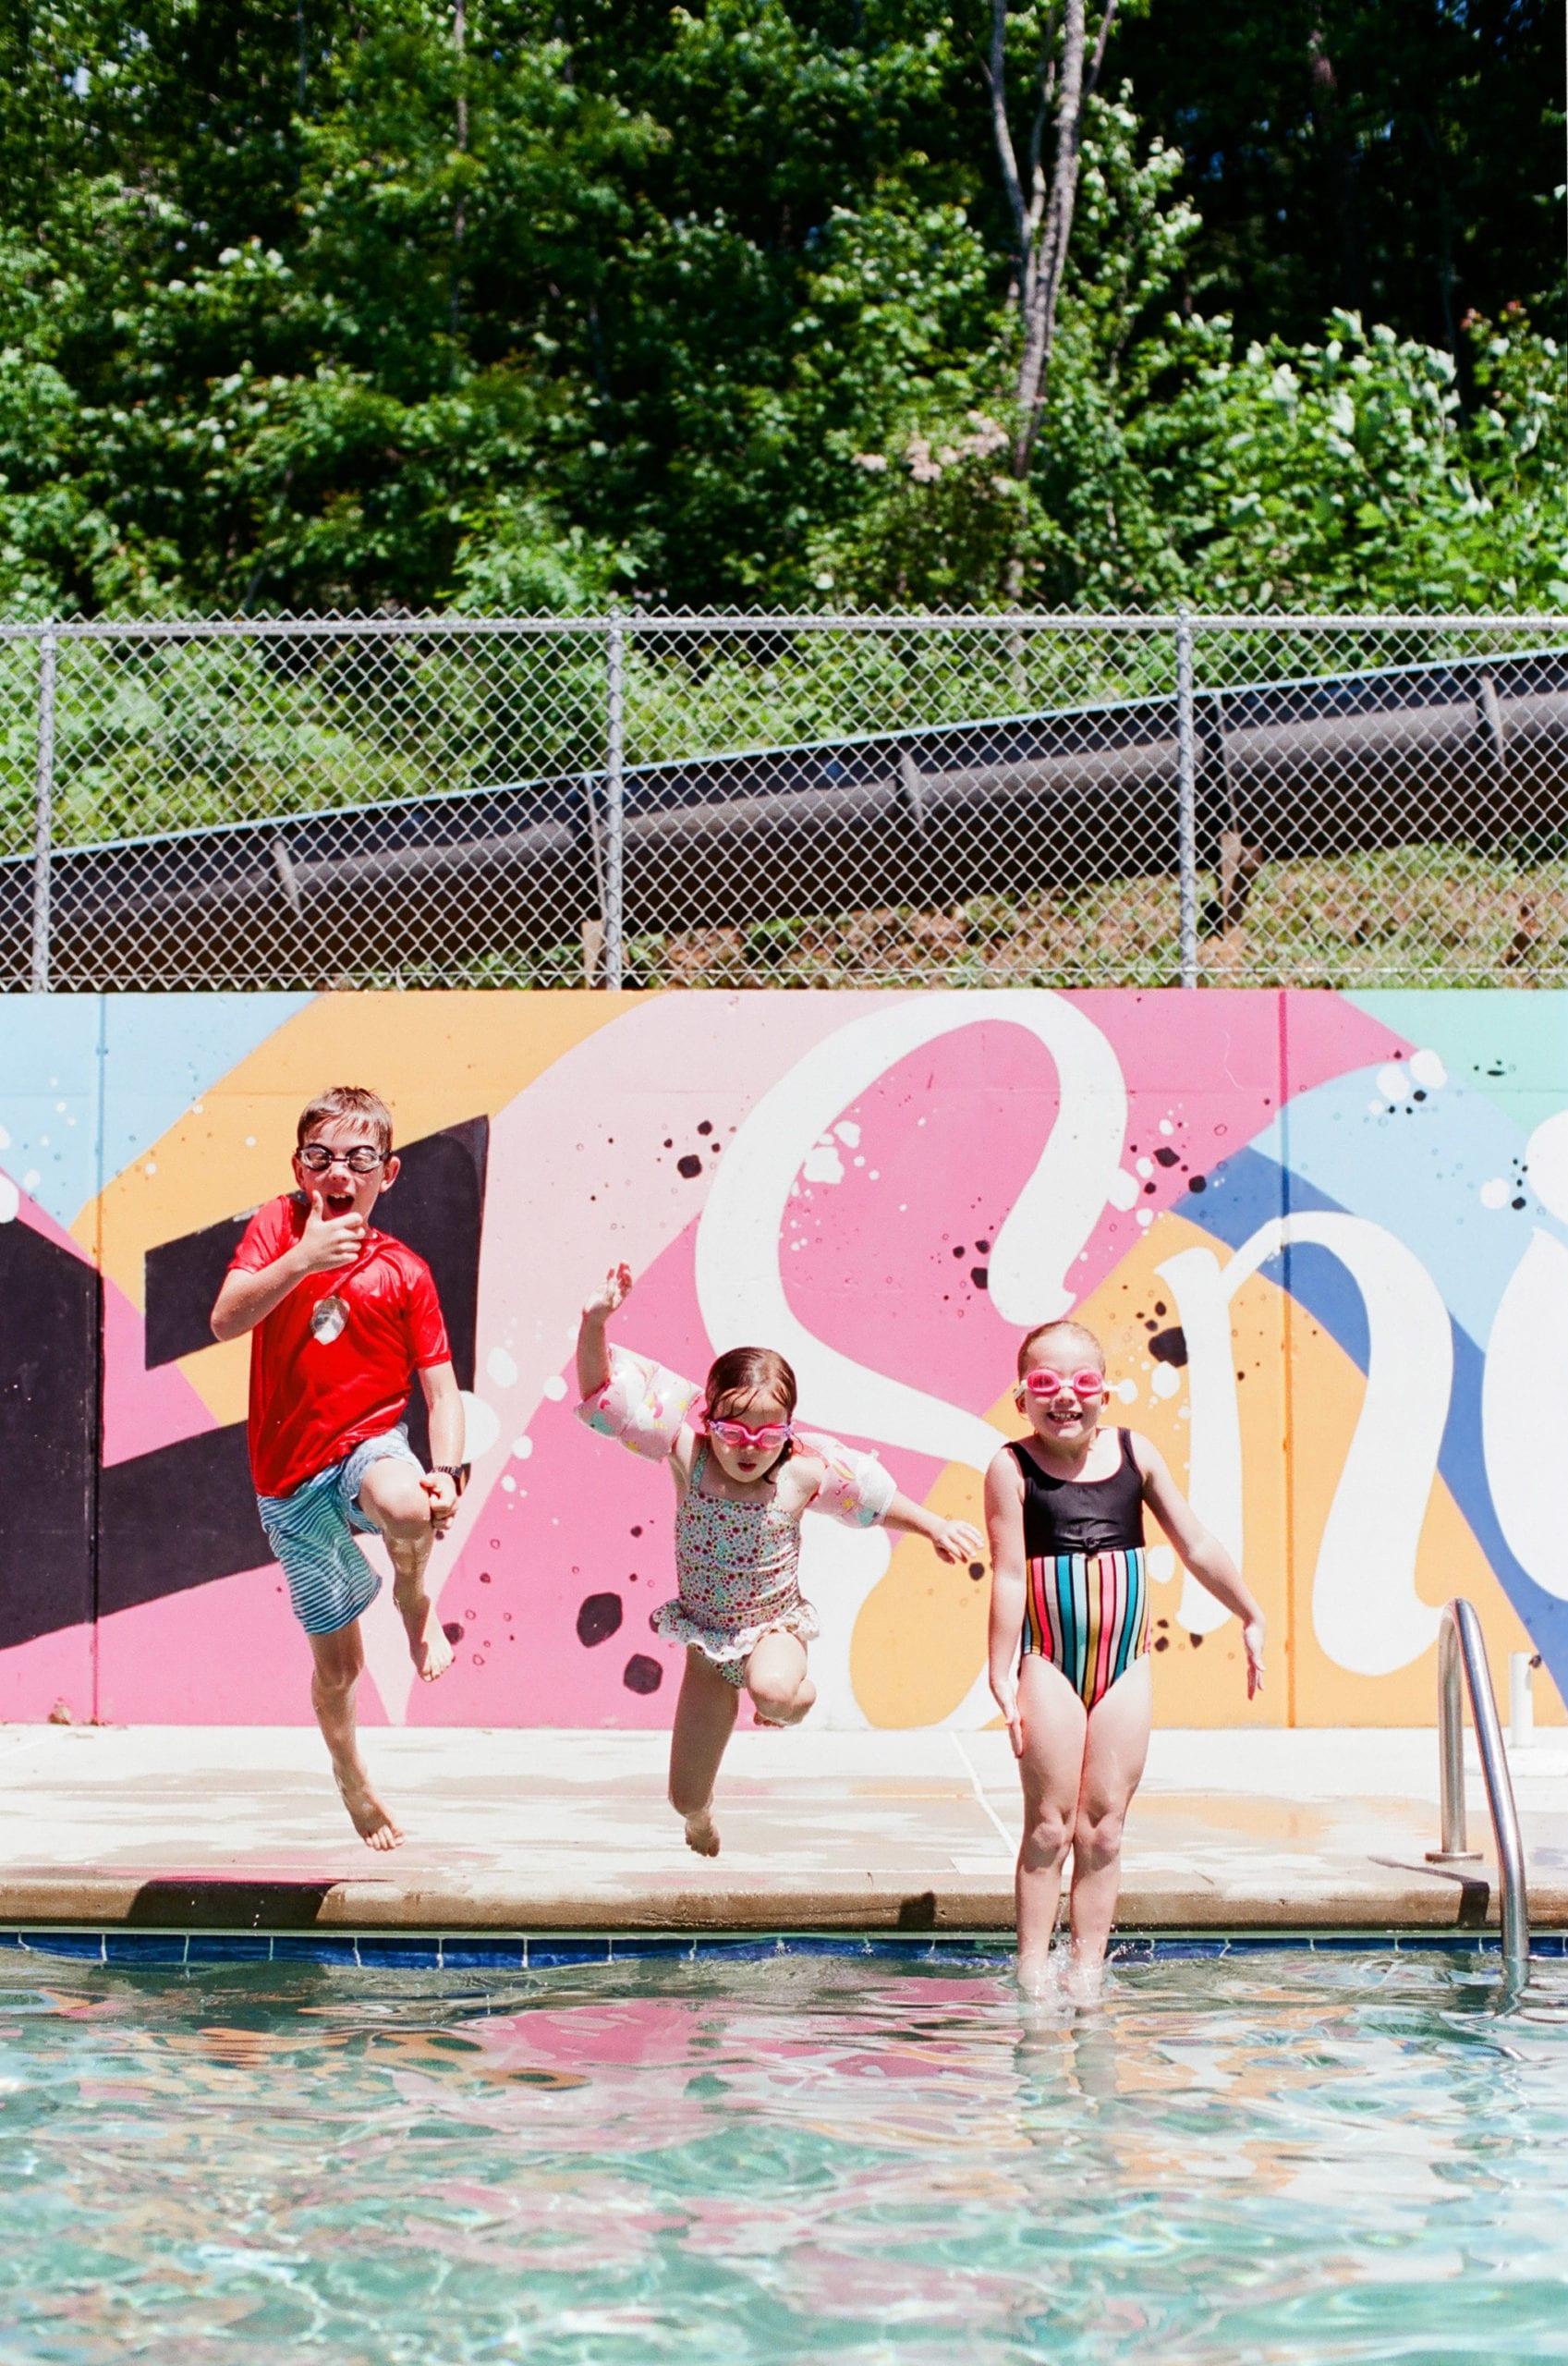 Kodak Ektar 100 kids jumping in pool photo